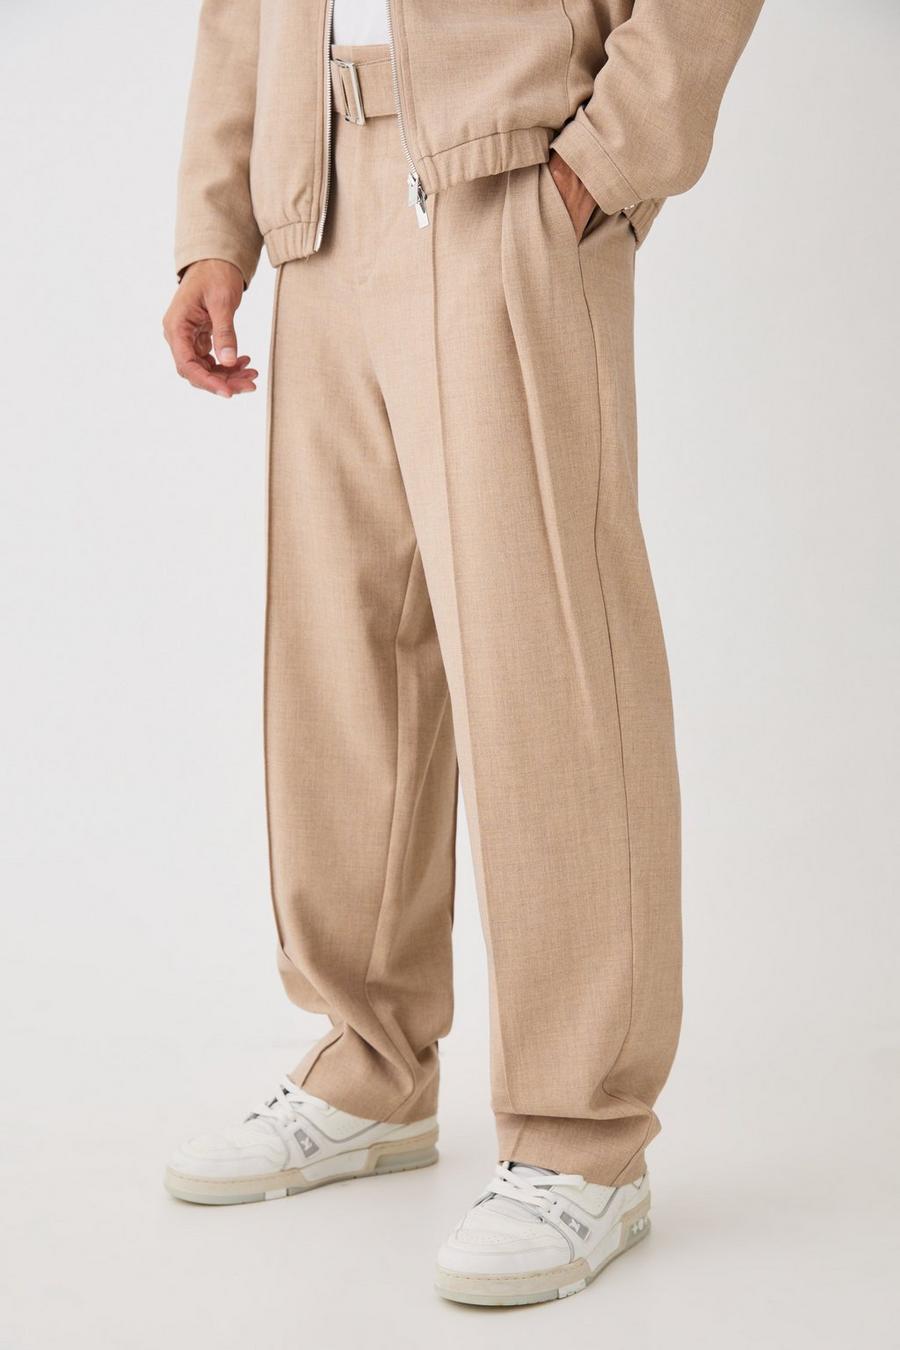 Pantalón texturizado entallado holgado con cinturón, Taupe image number 1